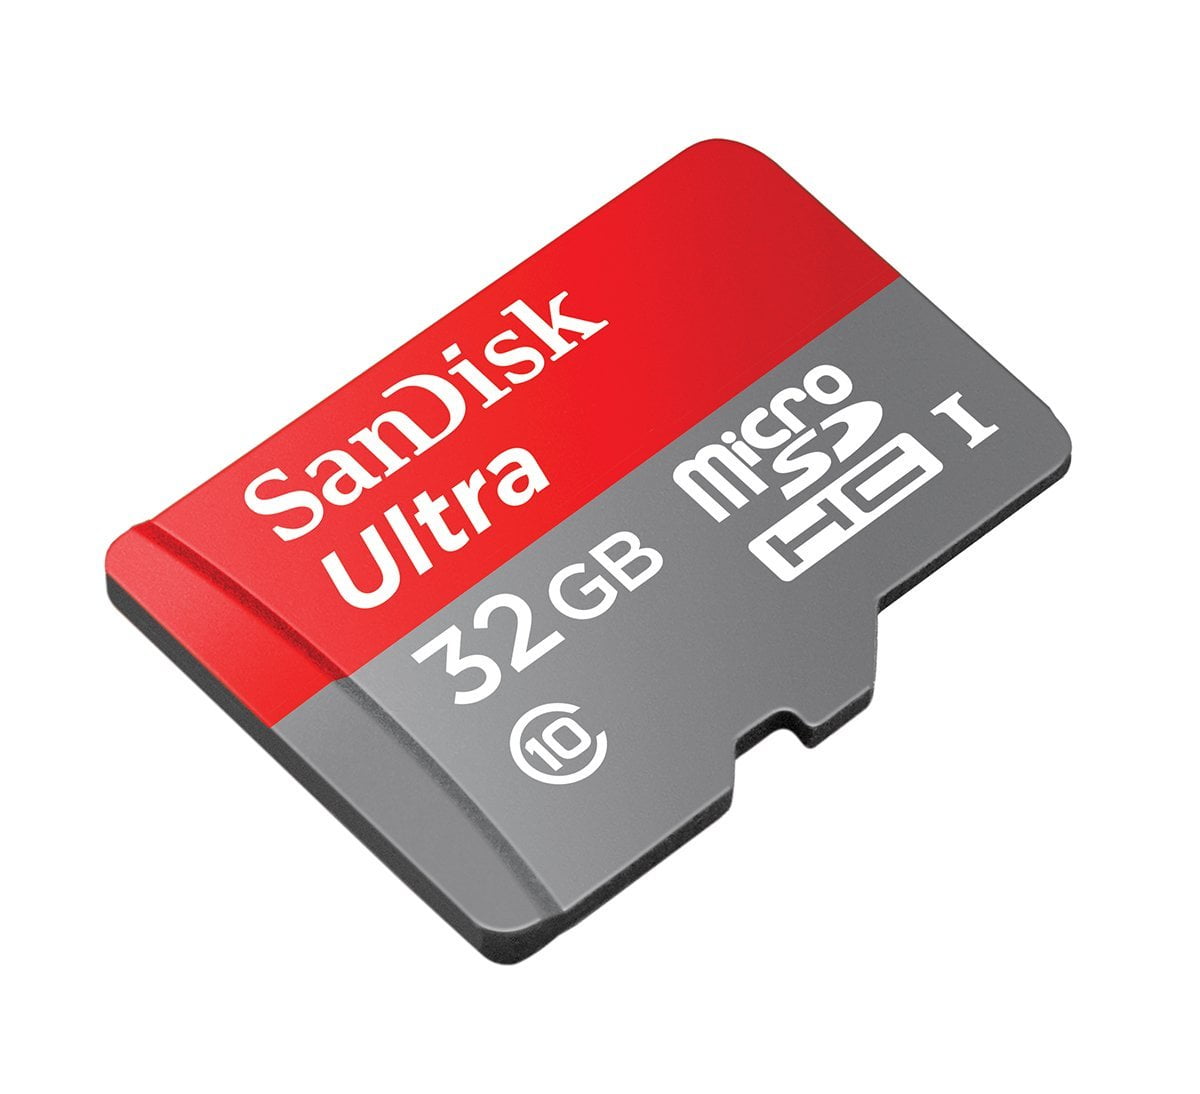 Refurbished Sandisk Sdsdqup 032g 6a Microsdhc Memory Card 32gb Walmart Com Walmart Com